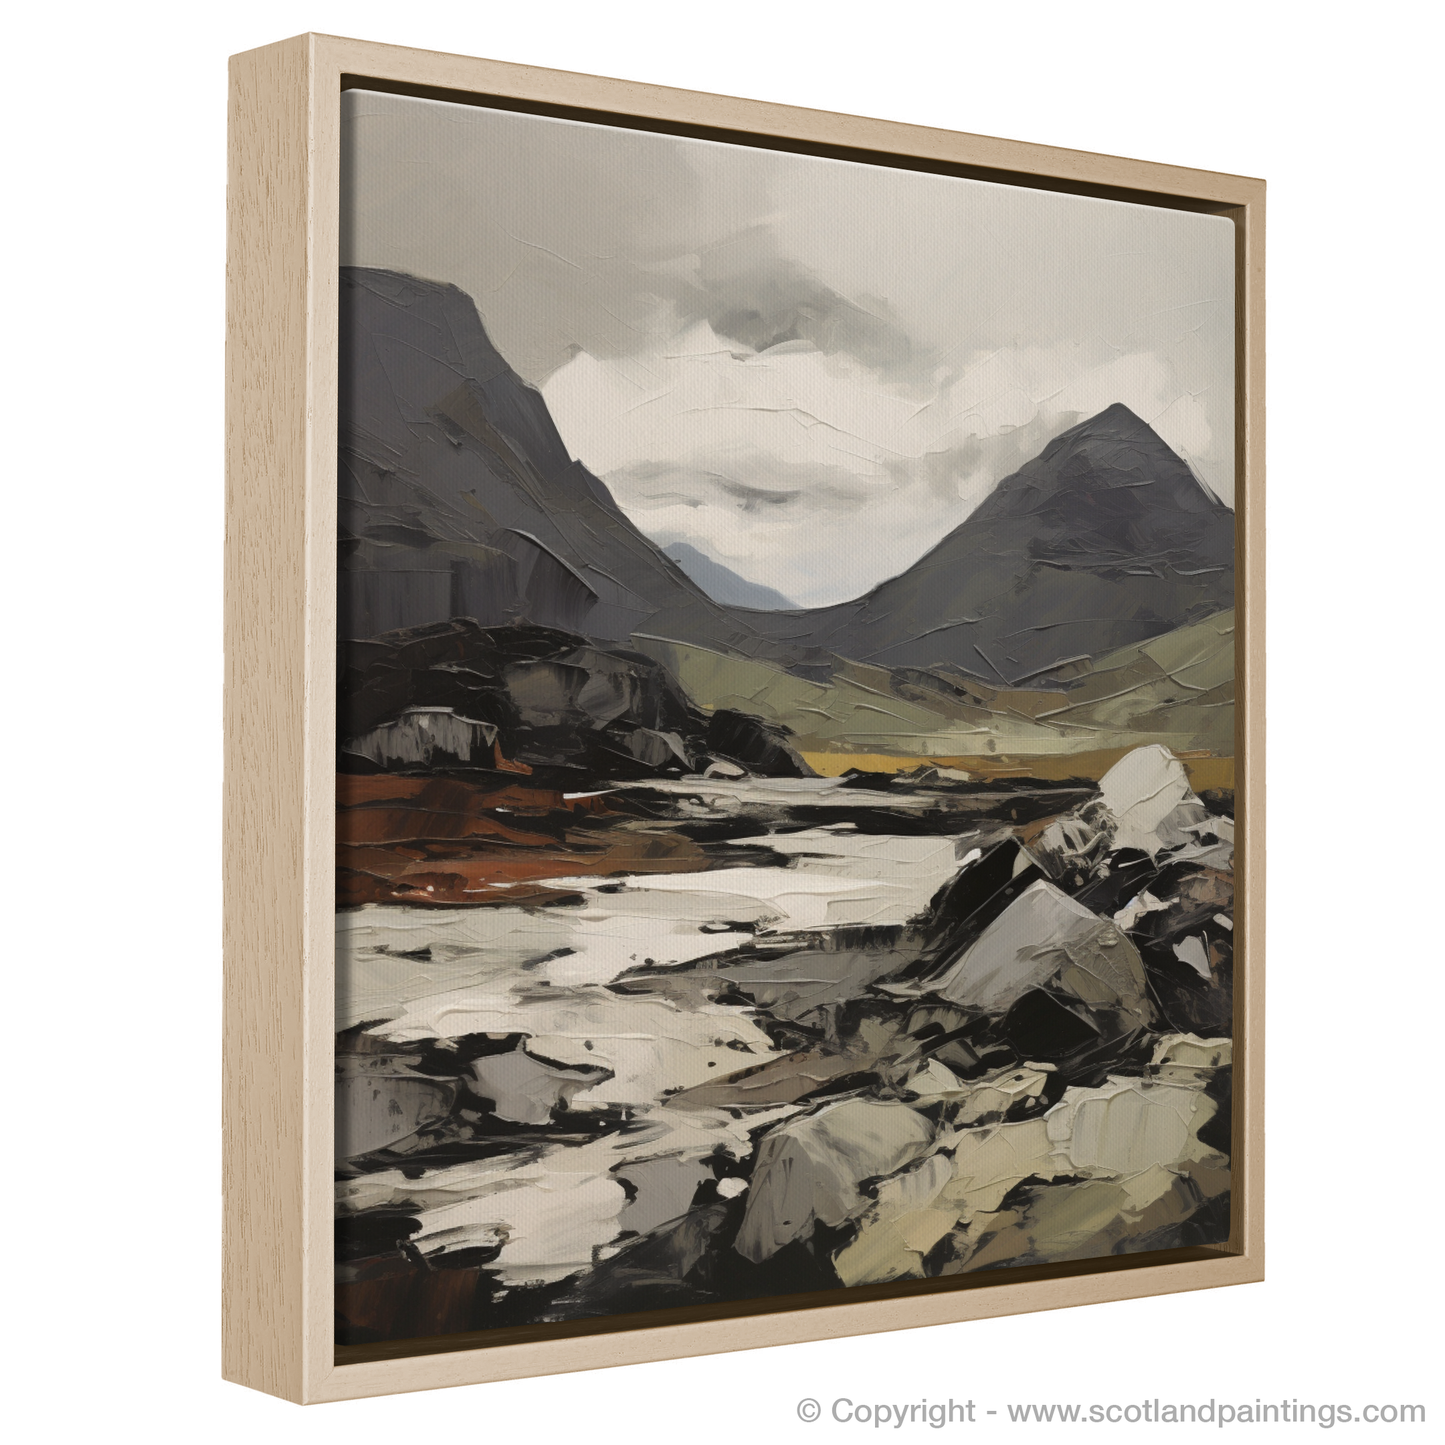 Painting and Art Print of Càrn a' Ghèoidh entitled "Càrn a' Ghèoidh: An Expressionist Homage to the Scottish Munros".